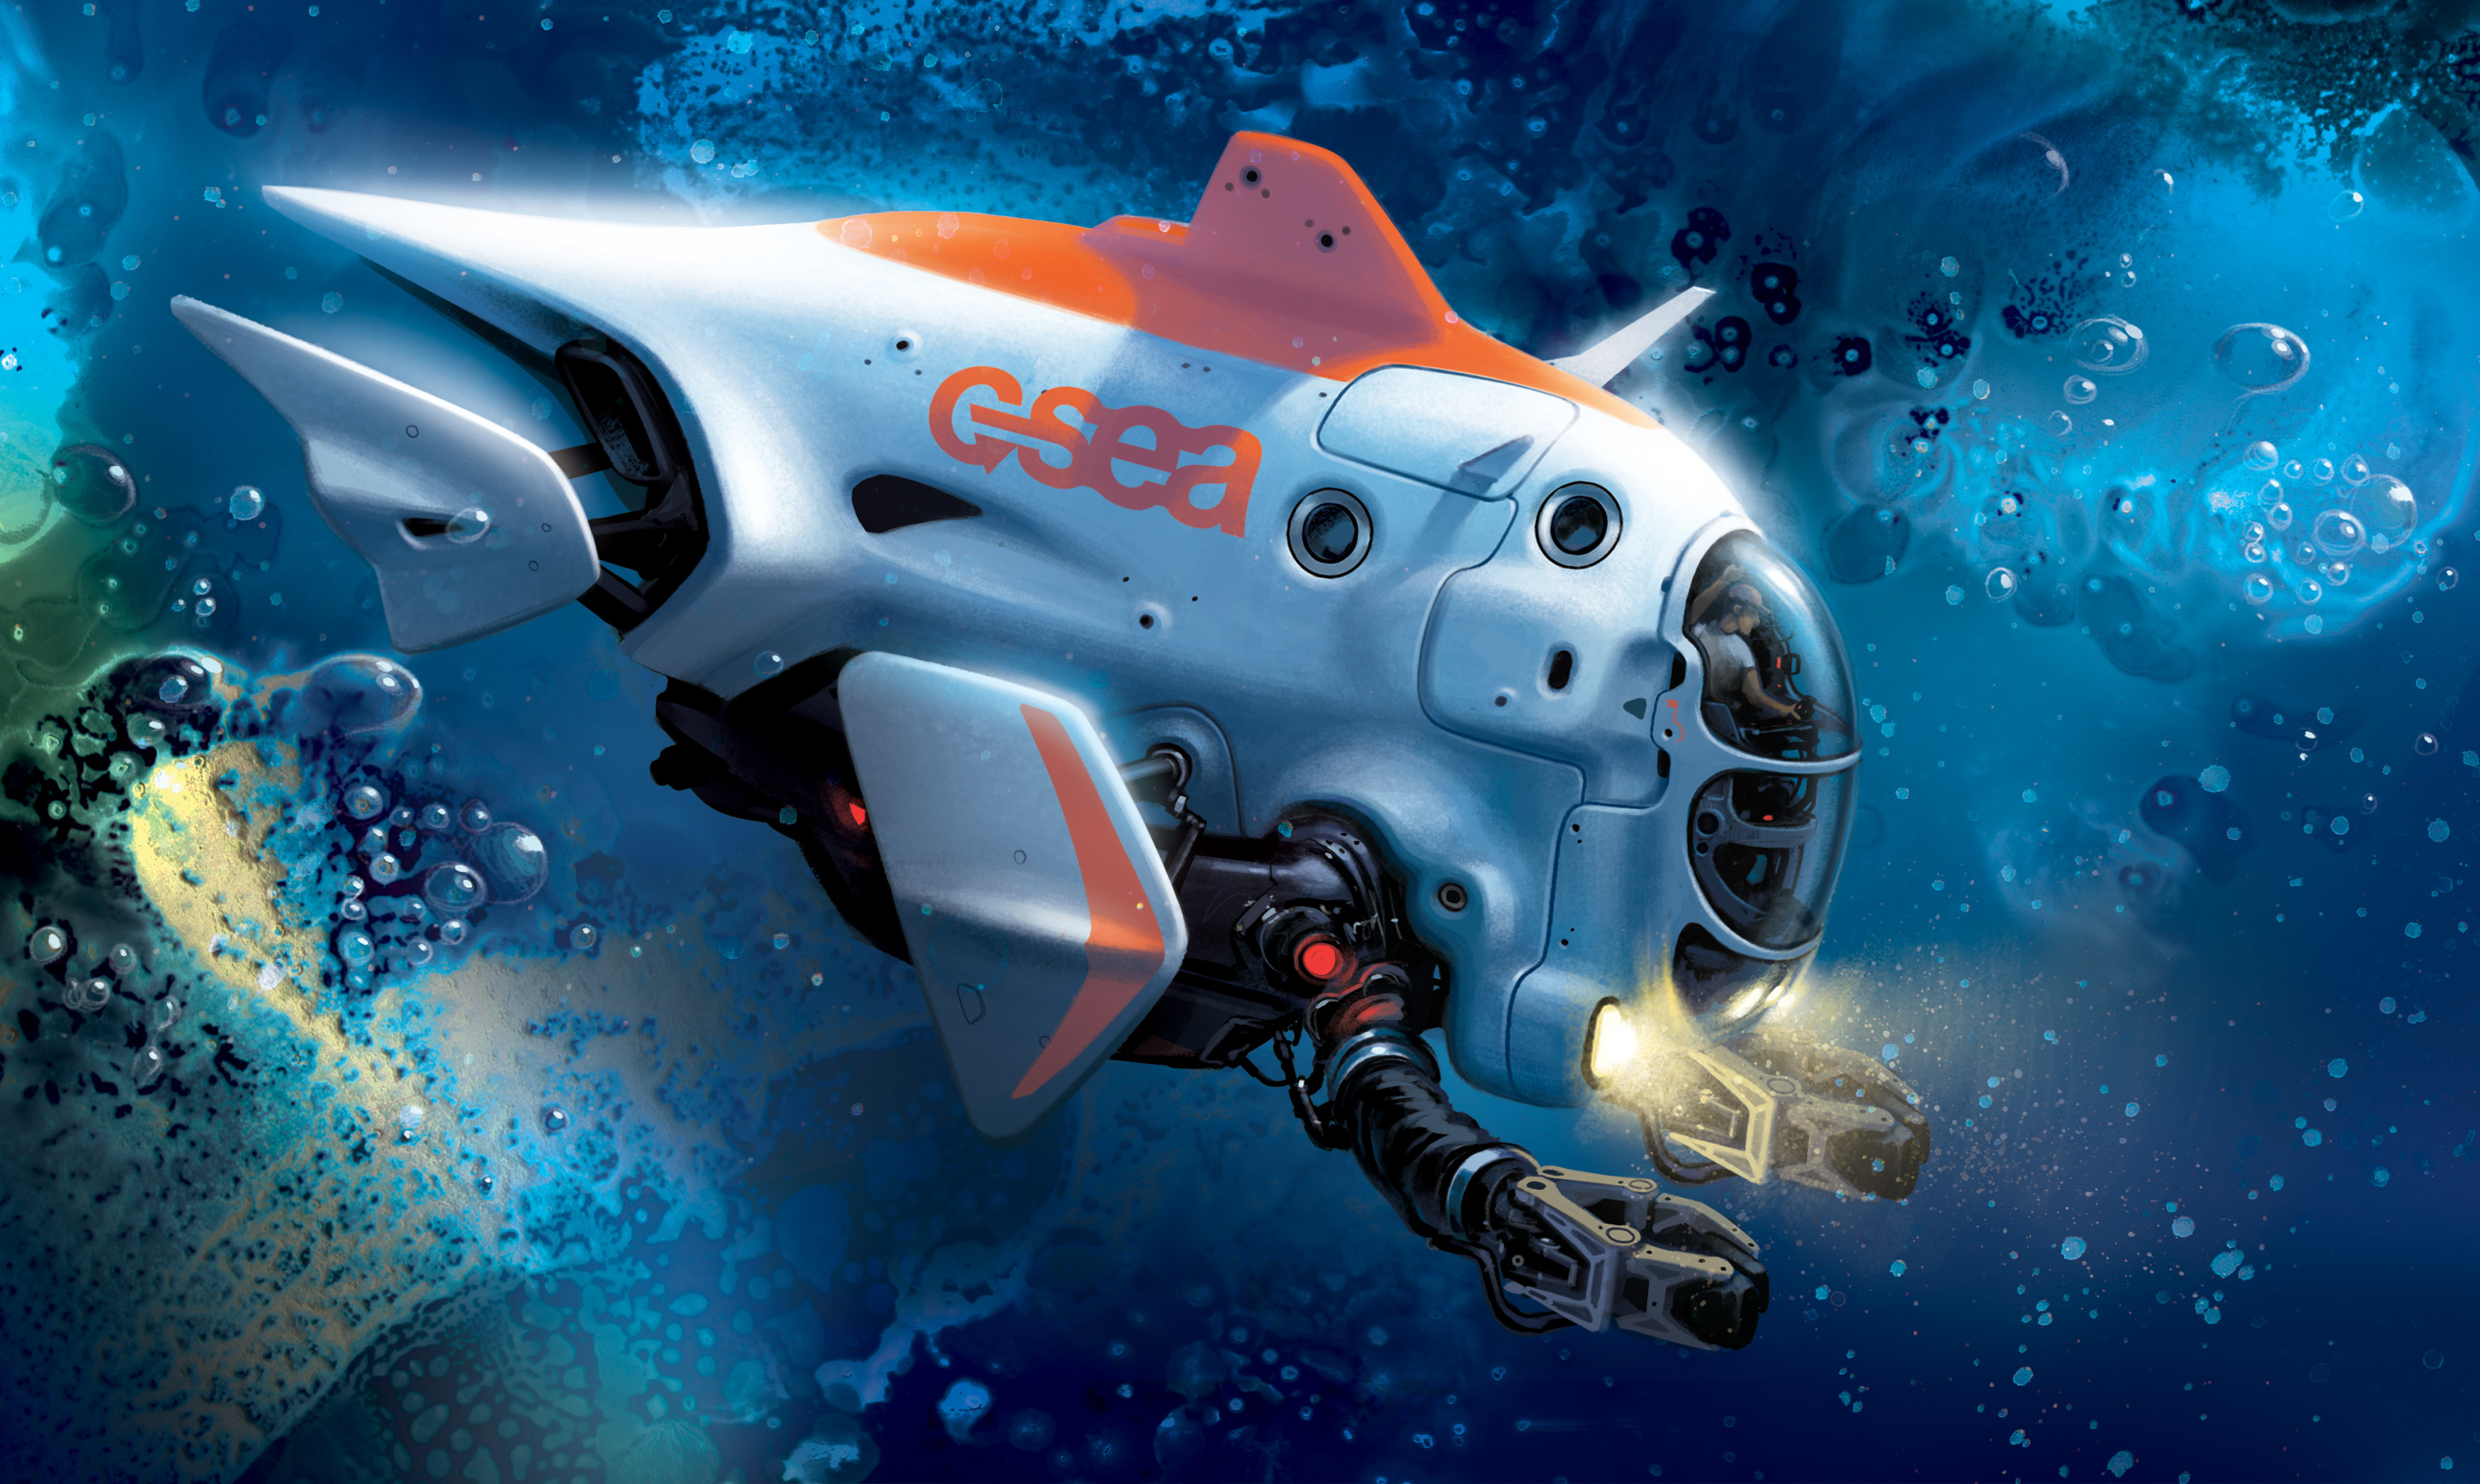 Global Space Exploration Agency megapressure submersible.